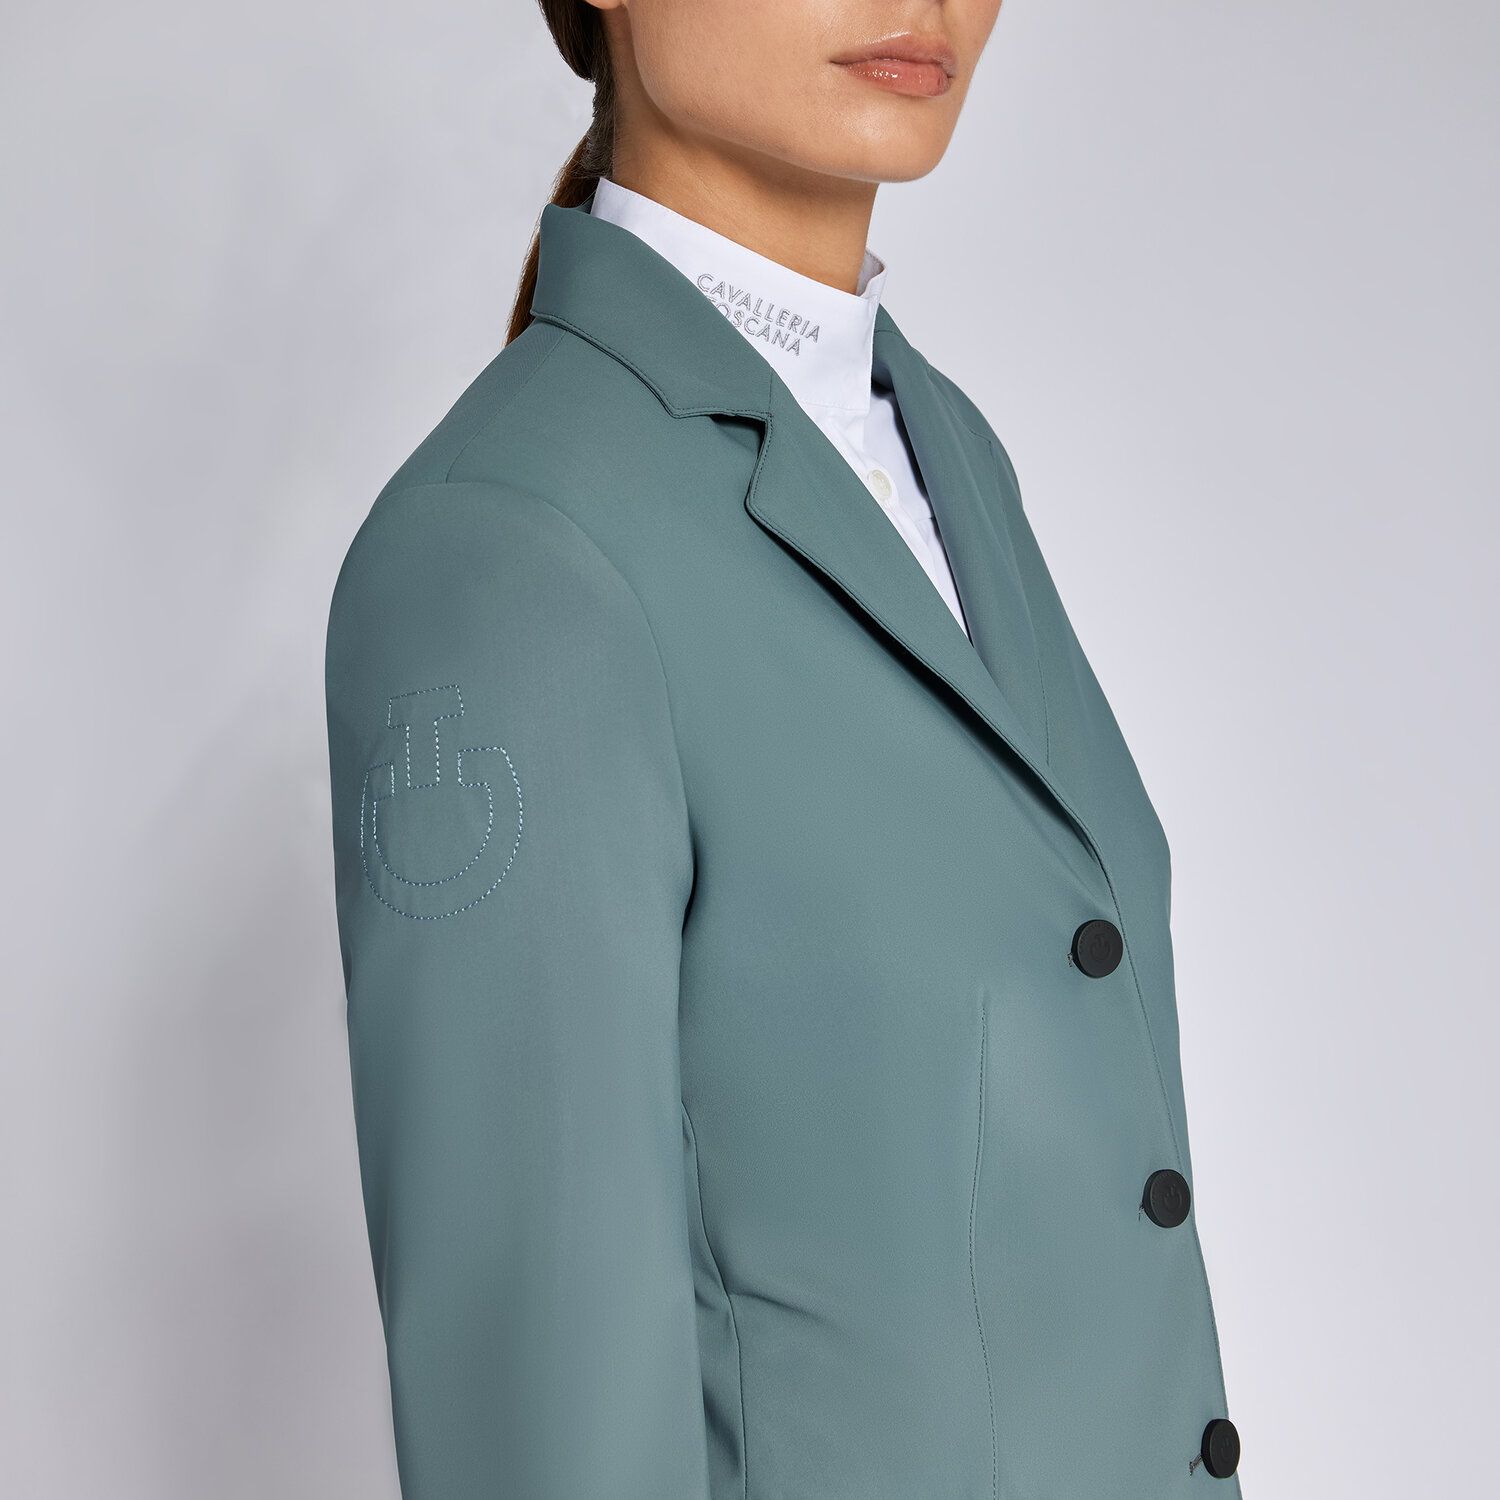 Cavalleria Toscana Women's competition jacket PETROLEUM-3